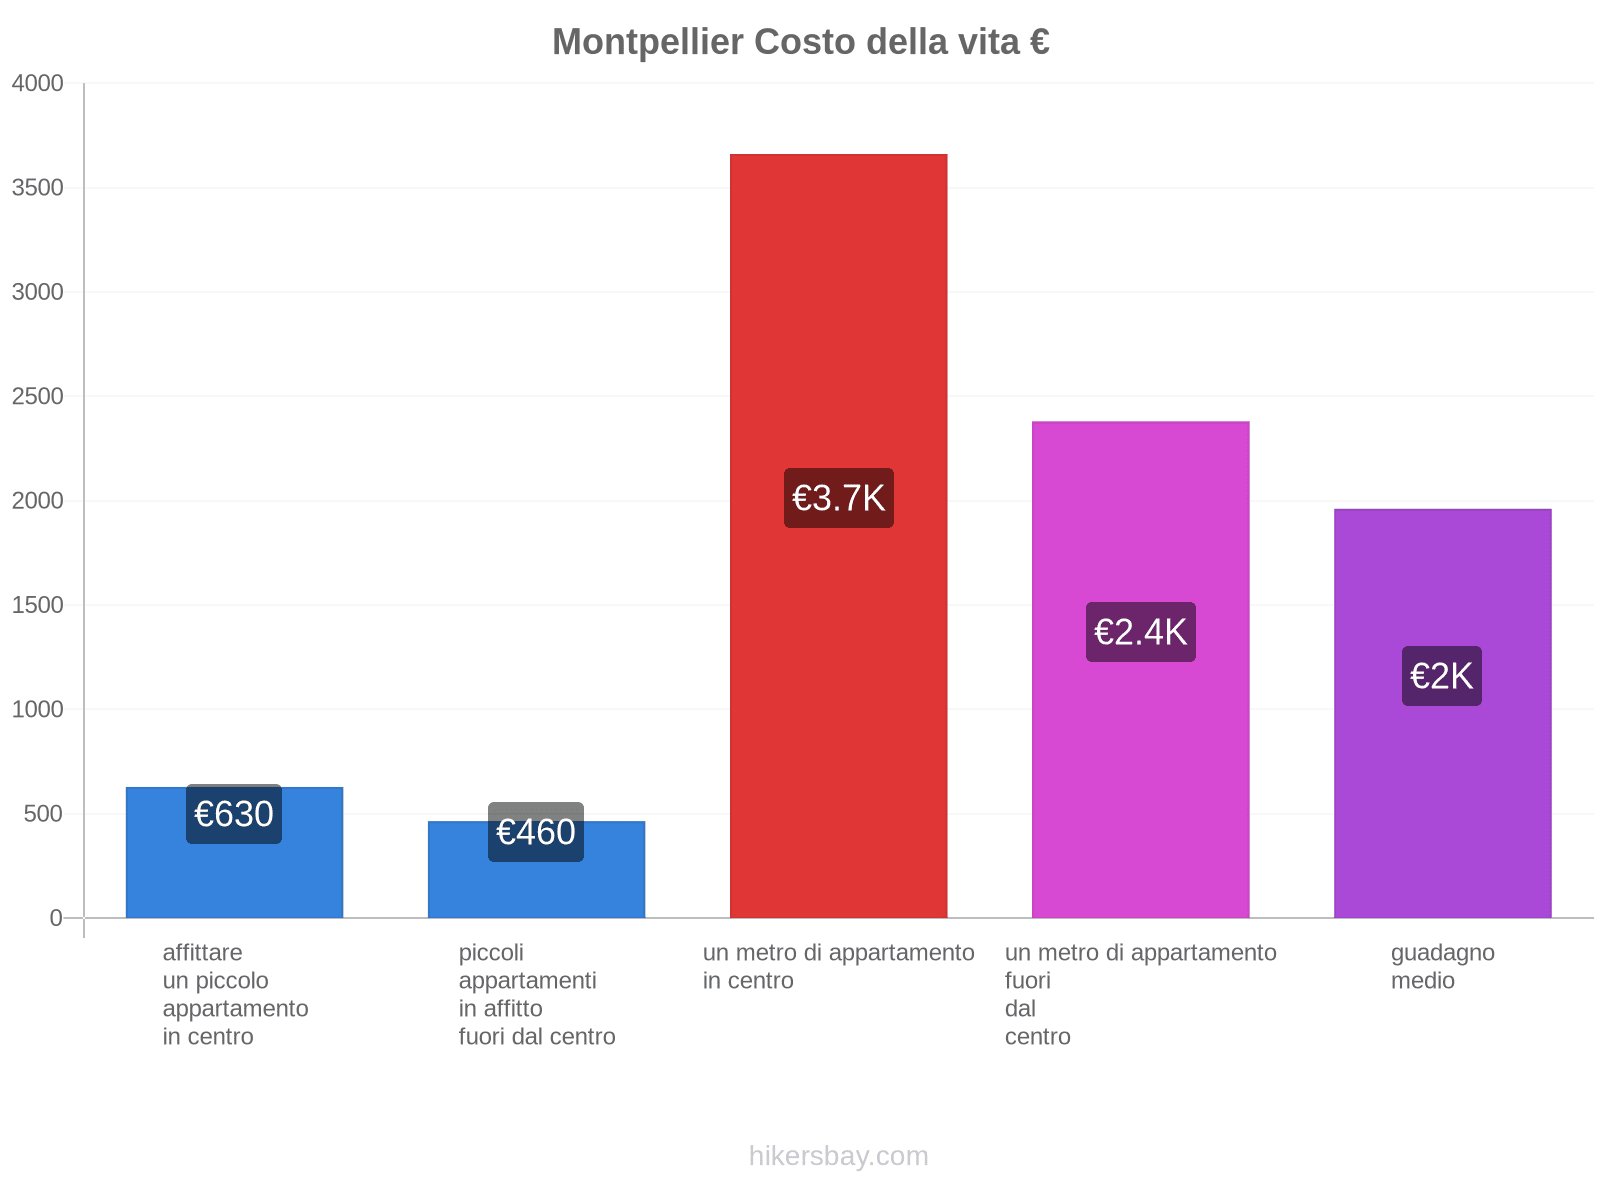 Montpellier costo della vita hikersbay.com